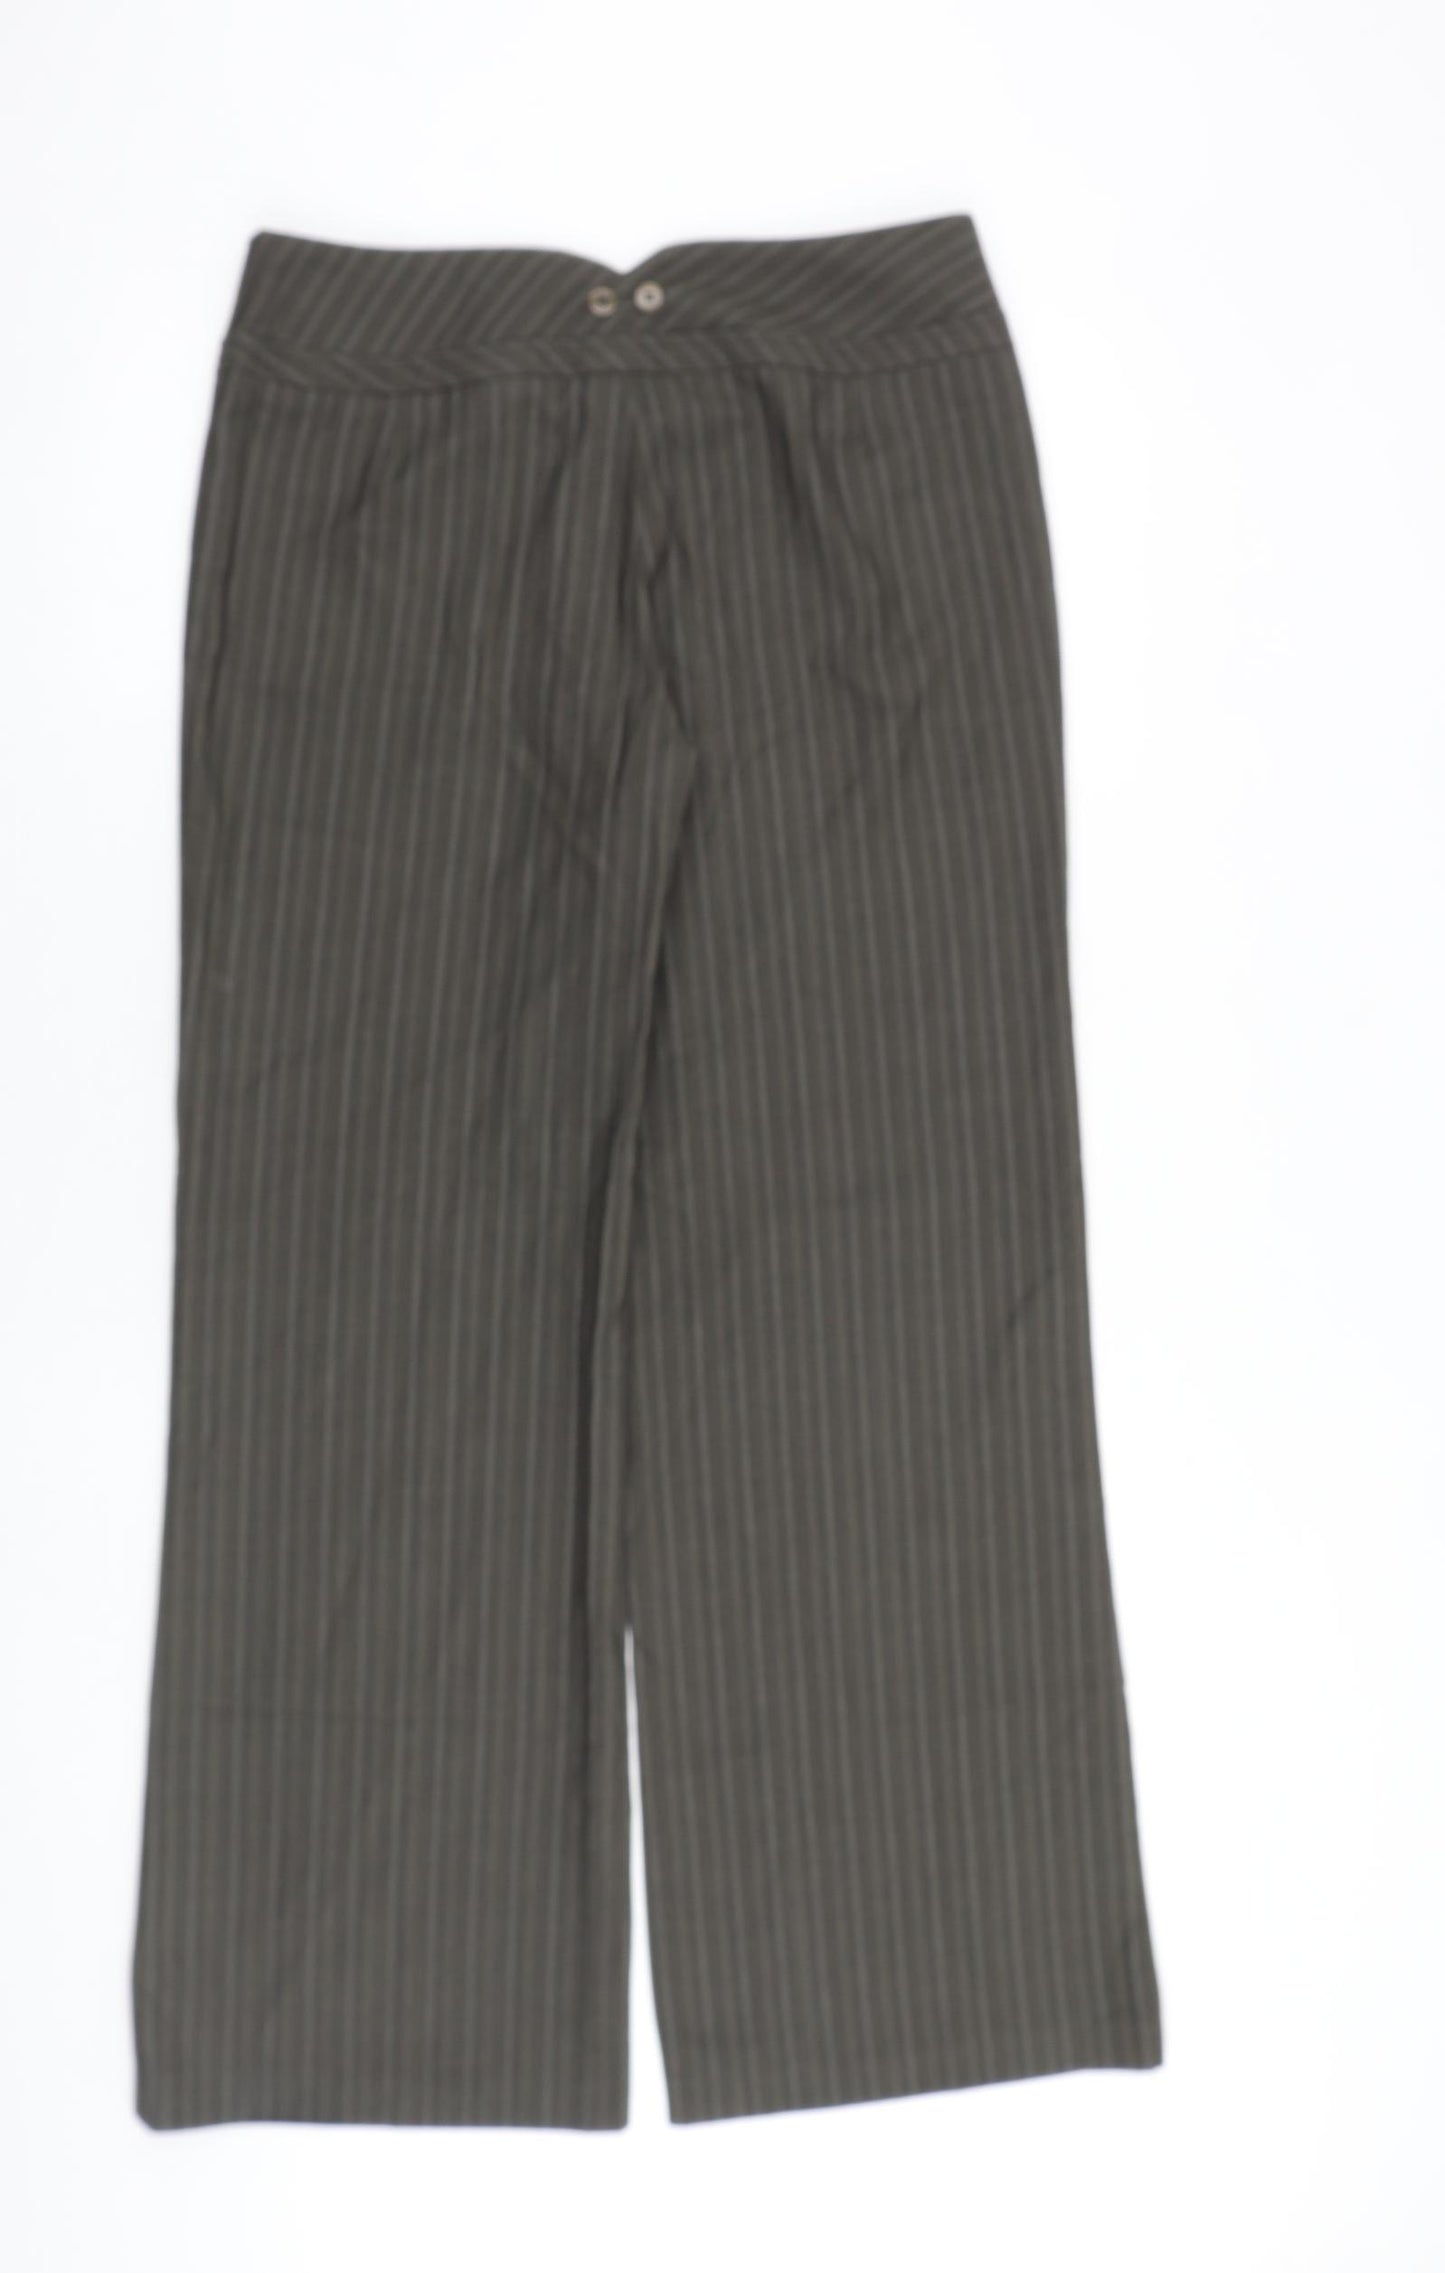 NEXT Womens Brown Striped Viscose Dress Pants Trousers Size 10 L31 in Regular Zip